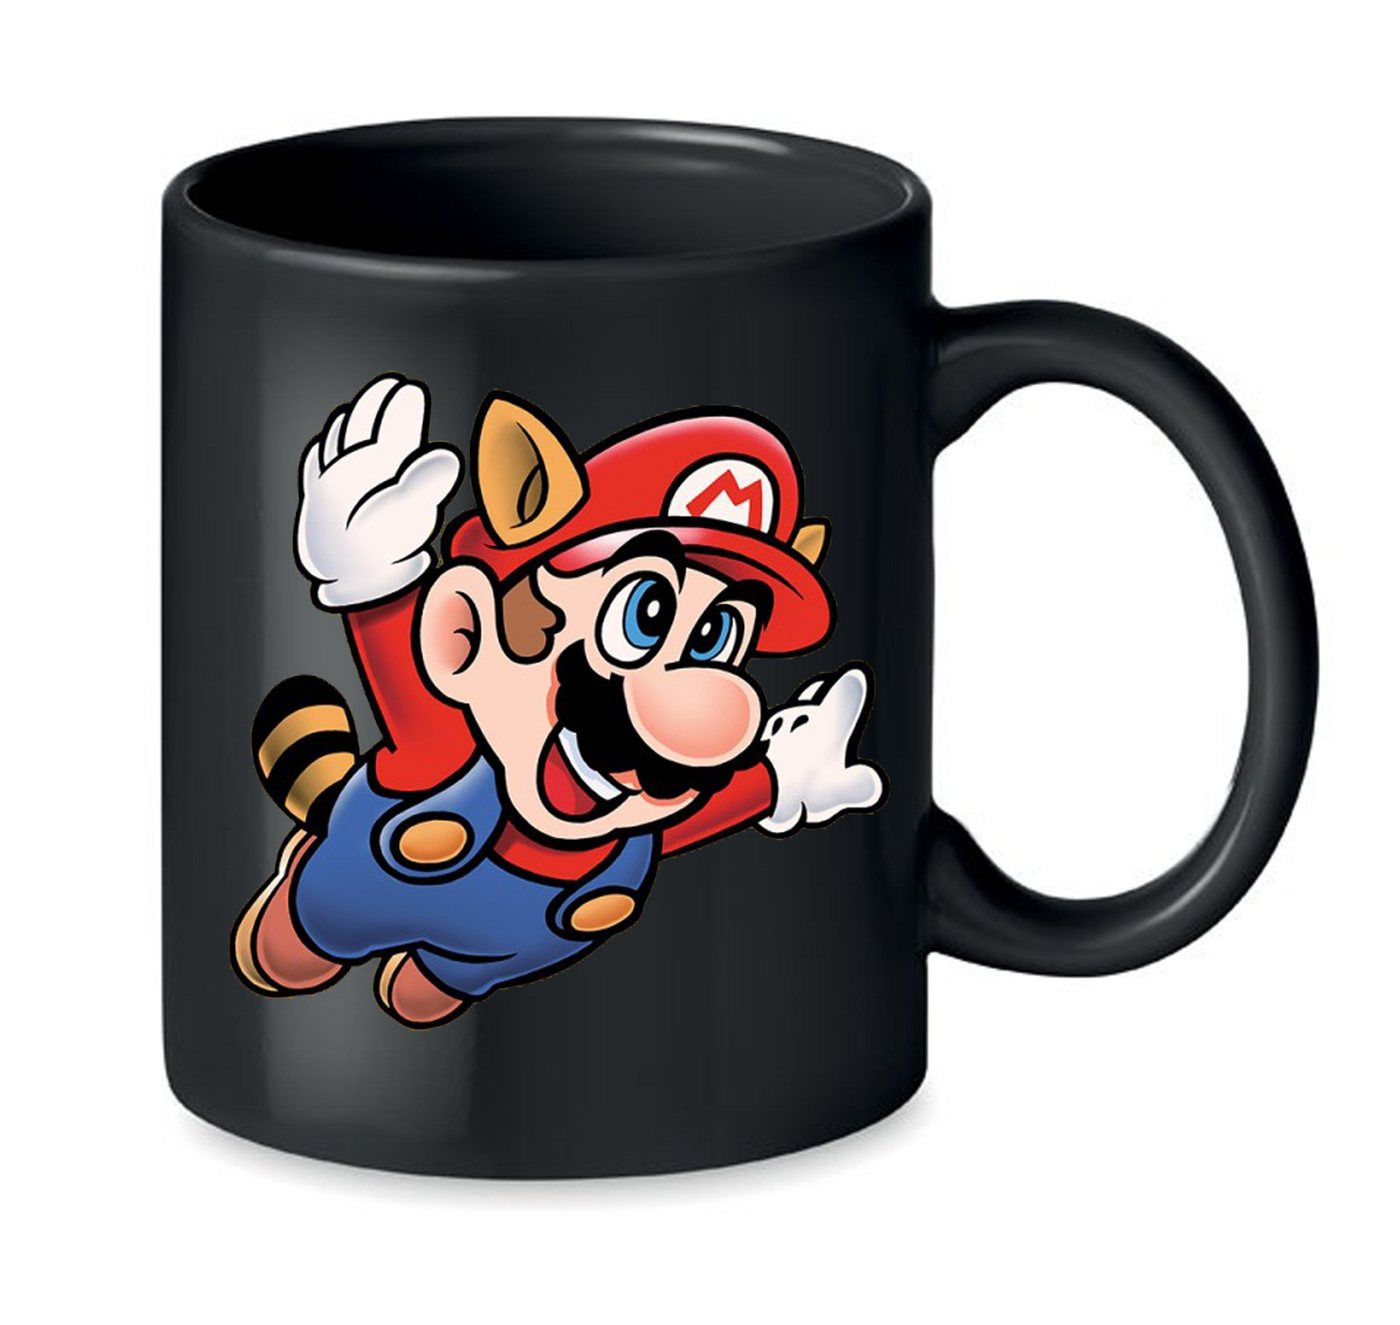 Blondie & Brownie Tasse Super Mario 3 Fligh Retro Gamer Gaming Nerd Konsole, Keramik von Blondie & Brownie